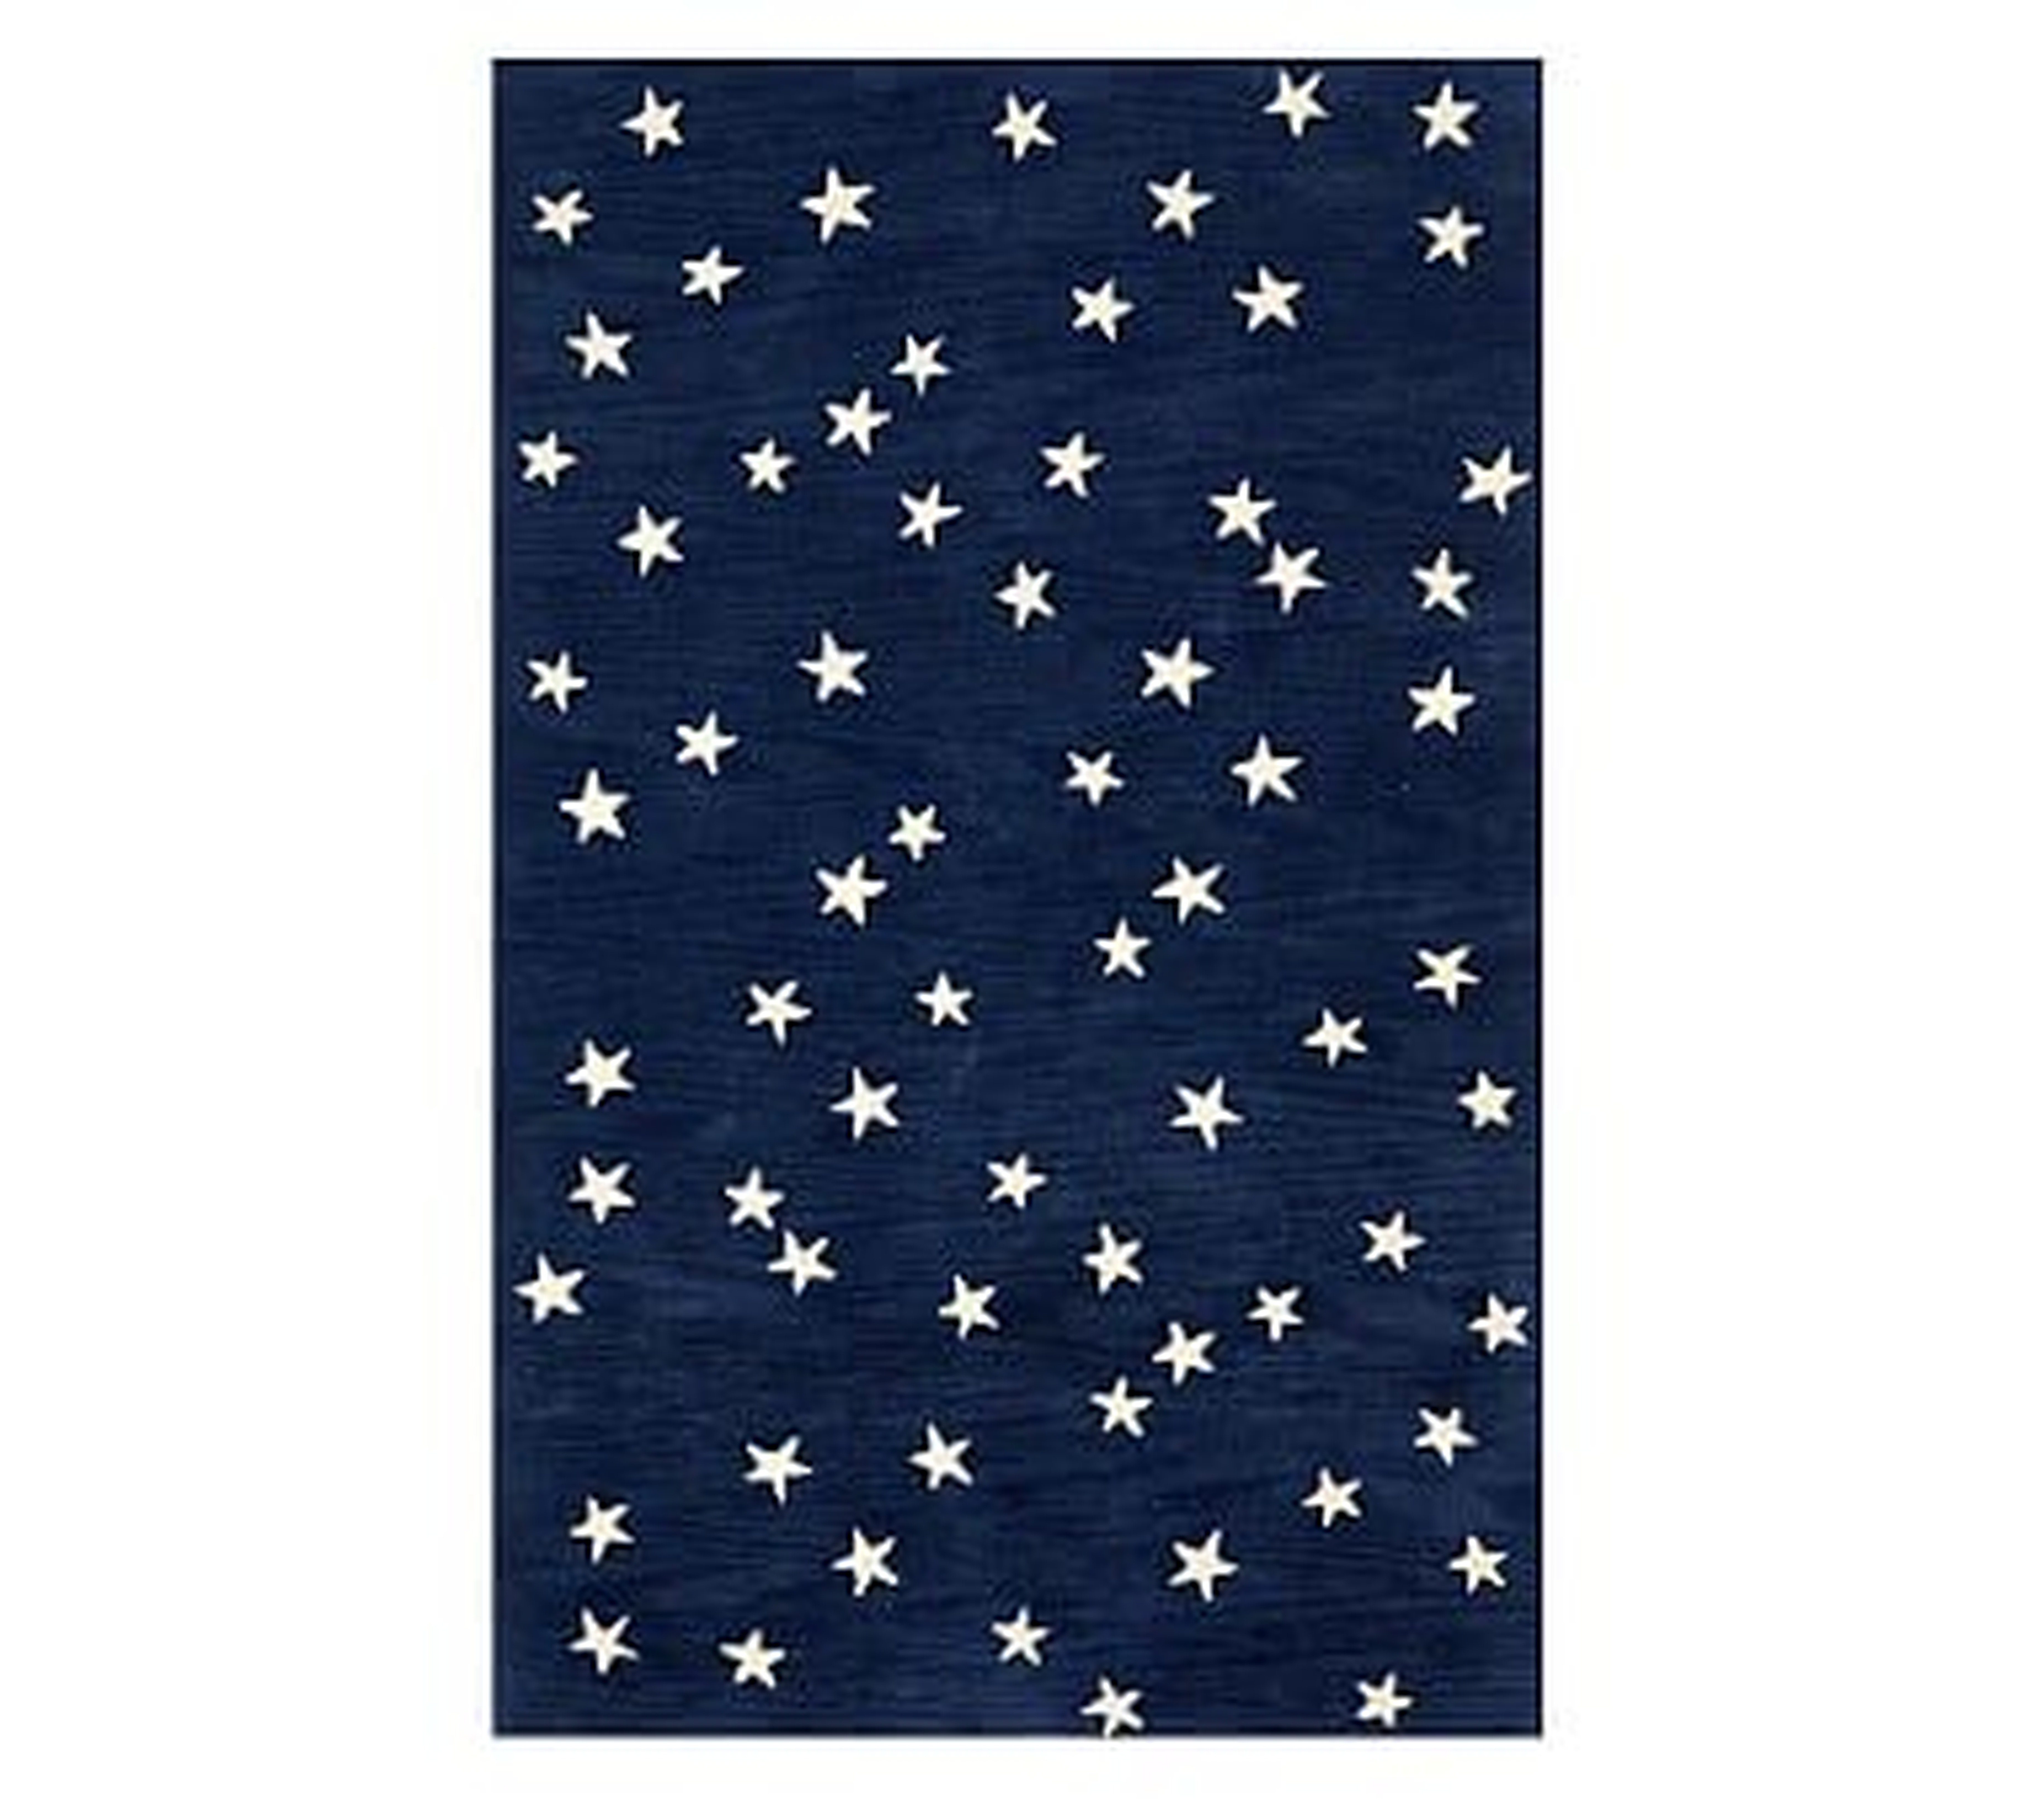 Starry Skies Rug, 7x10', Navy - Pottery Barn Kids